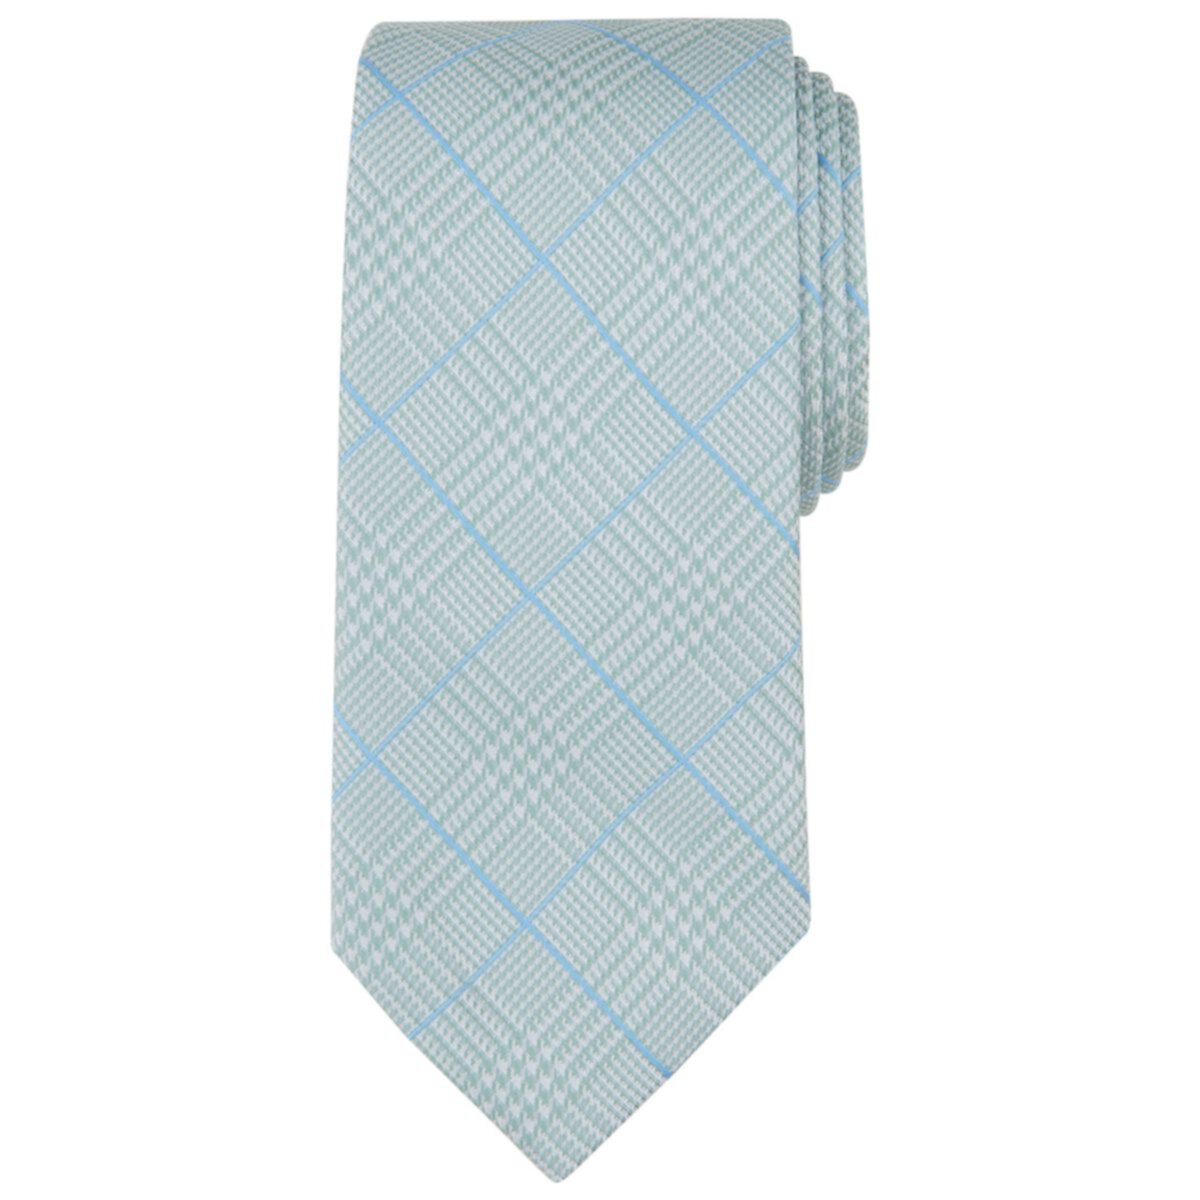 Мужской галстук с узором на заказ Bespoke